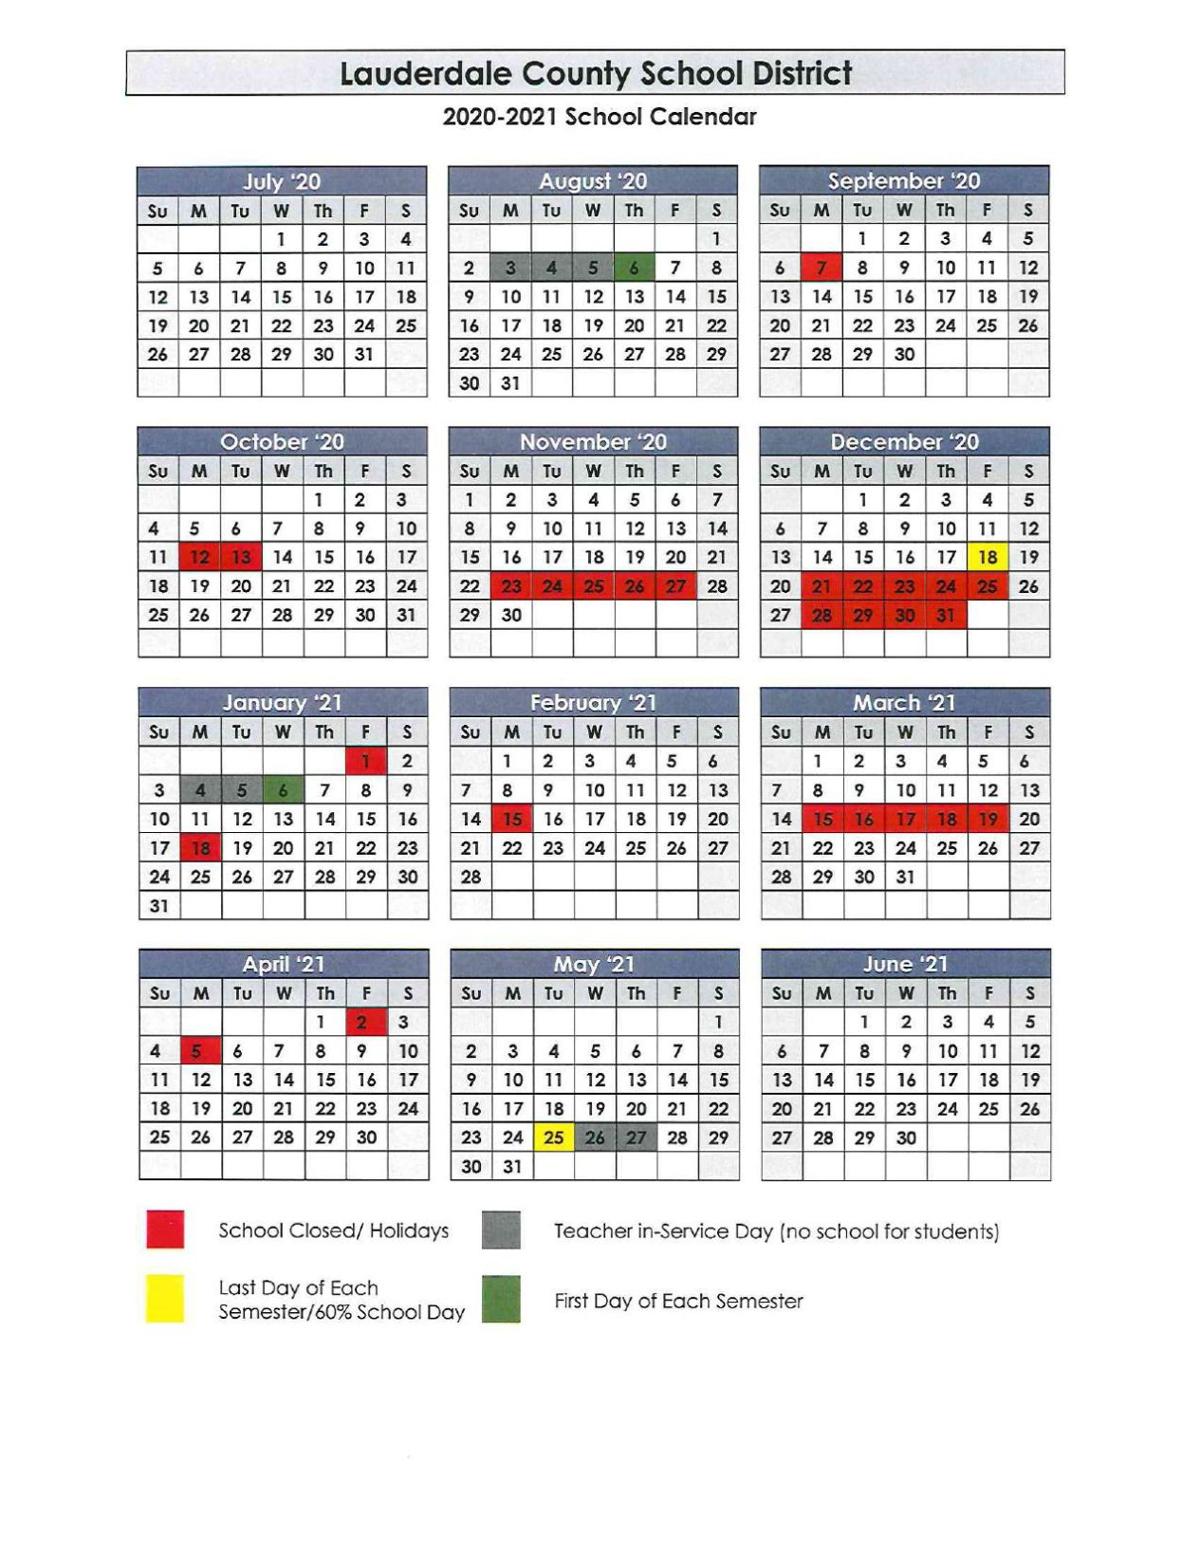 Meridian, Lauderdale County schools adopt 20202021 calendars Local